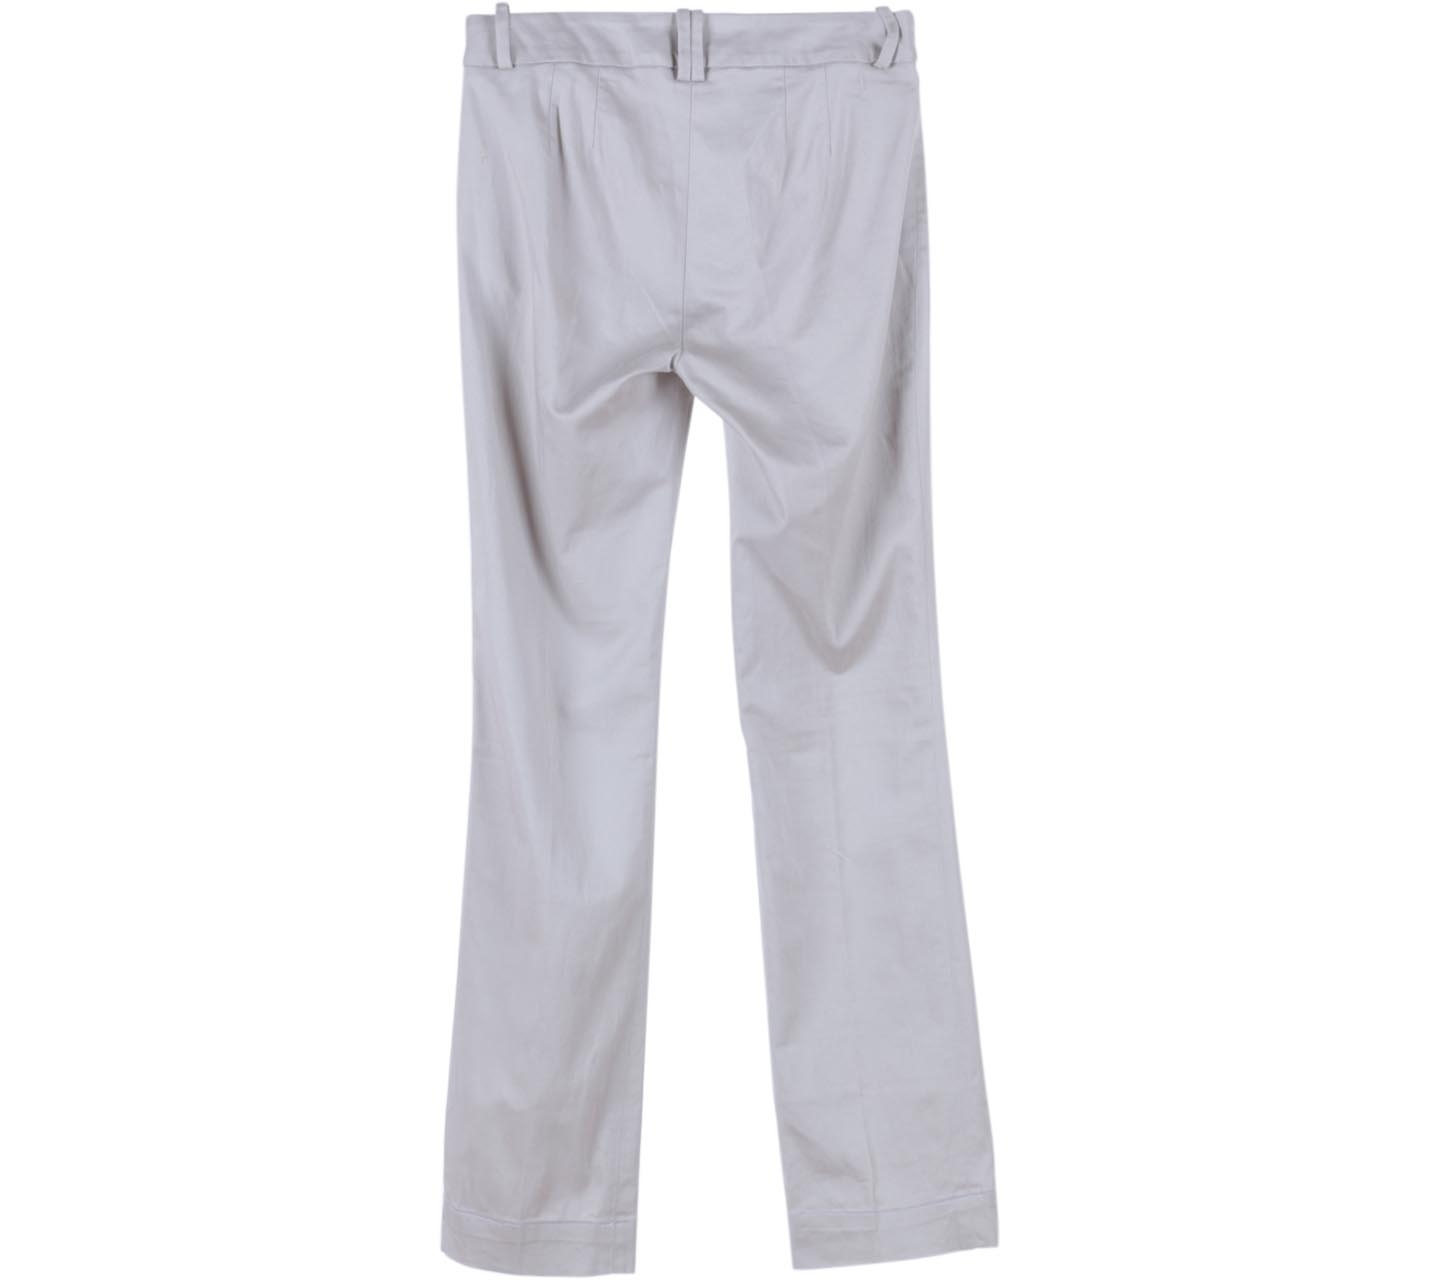 Zara Grey Pants